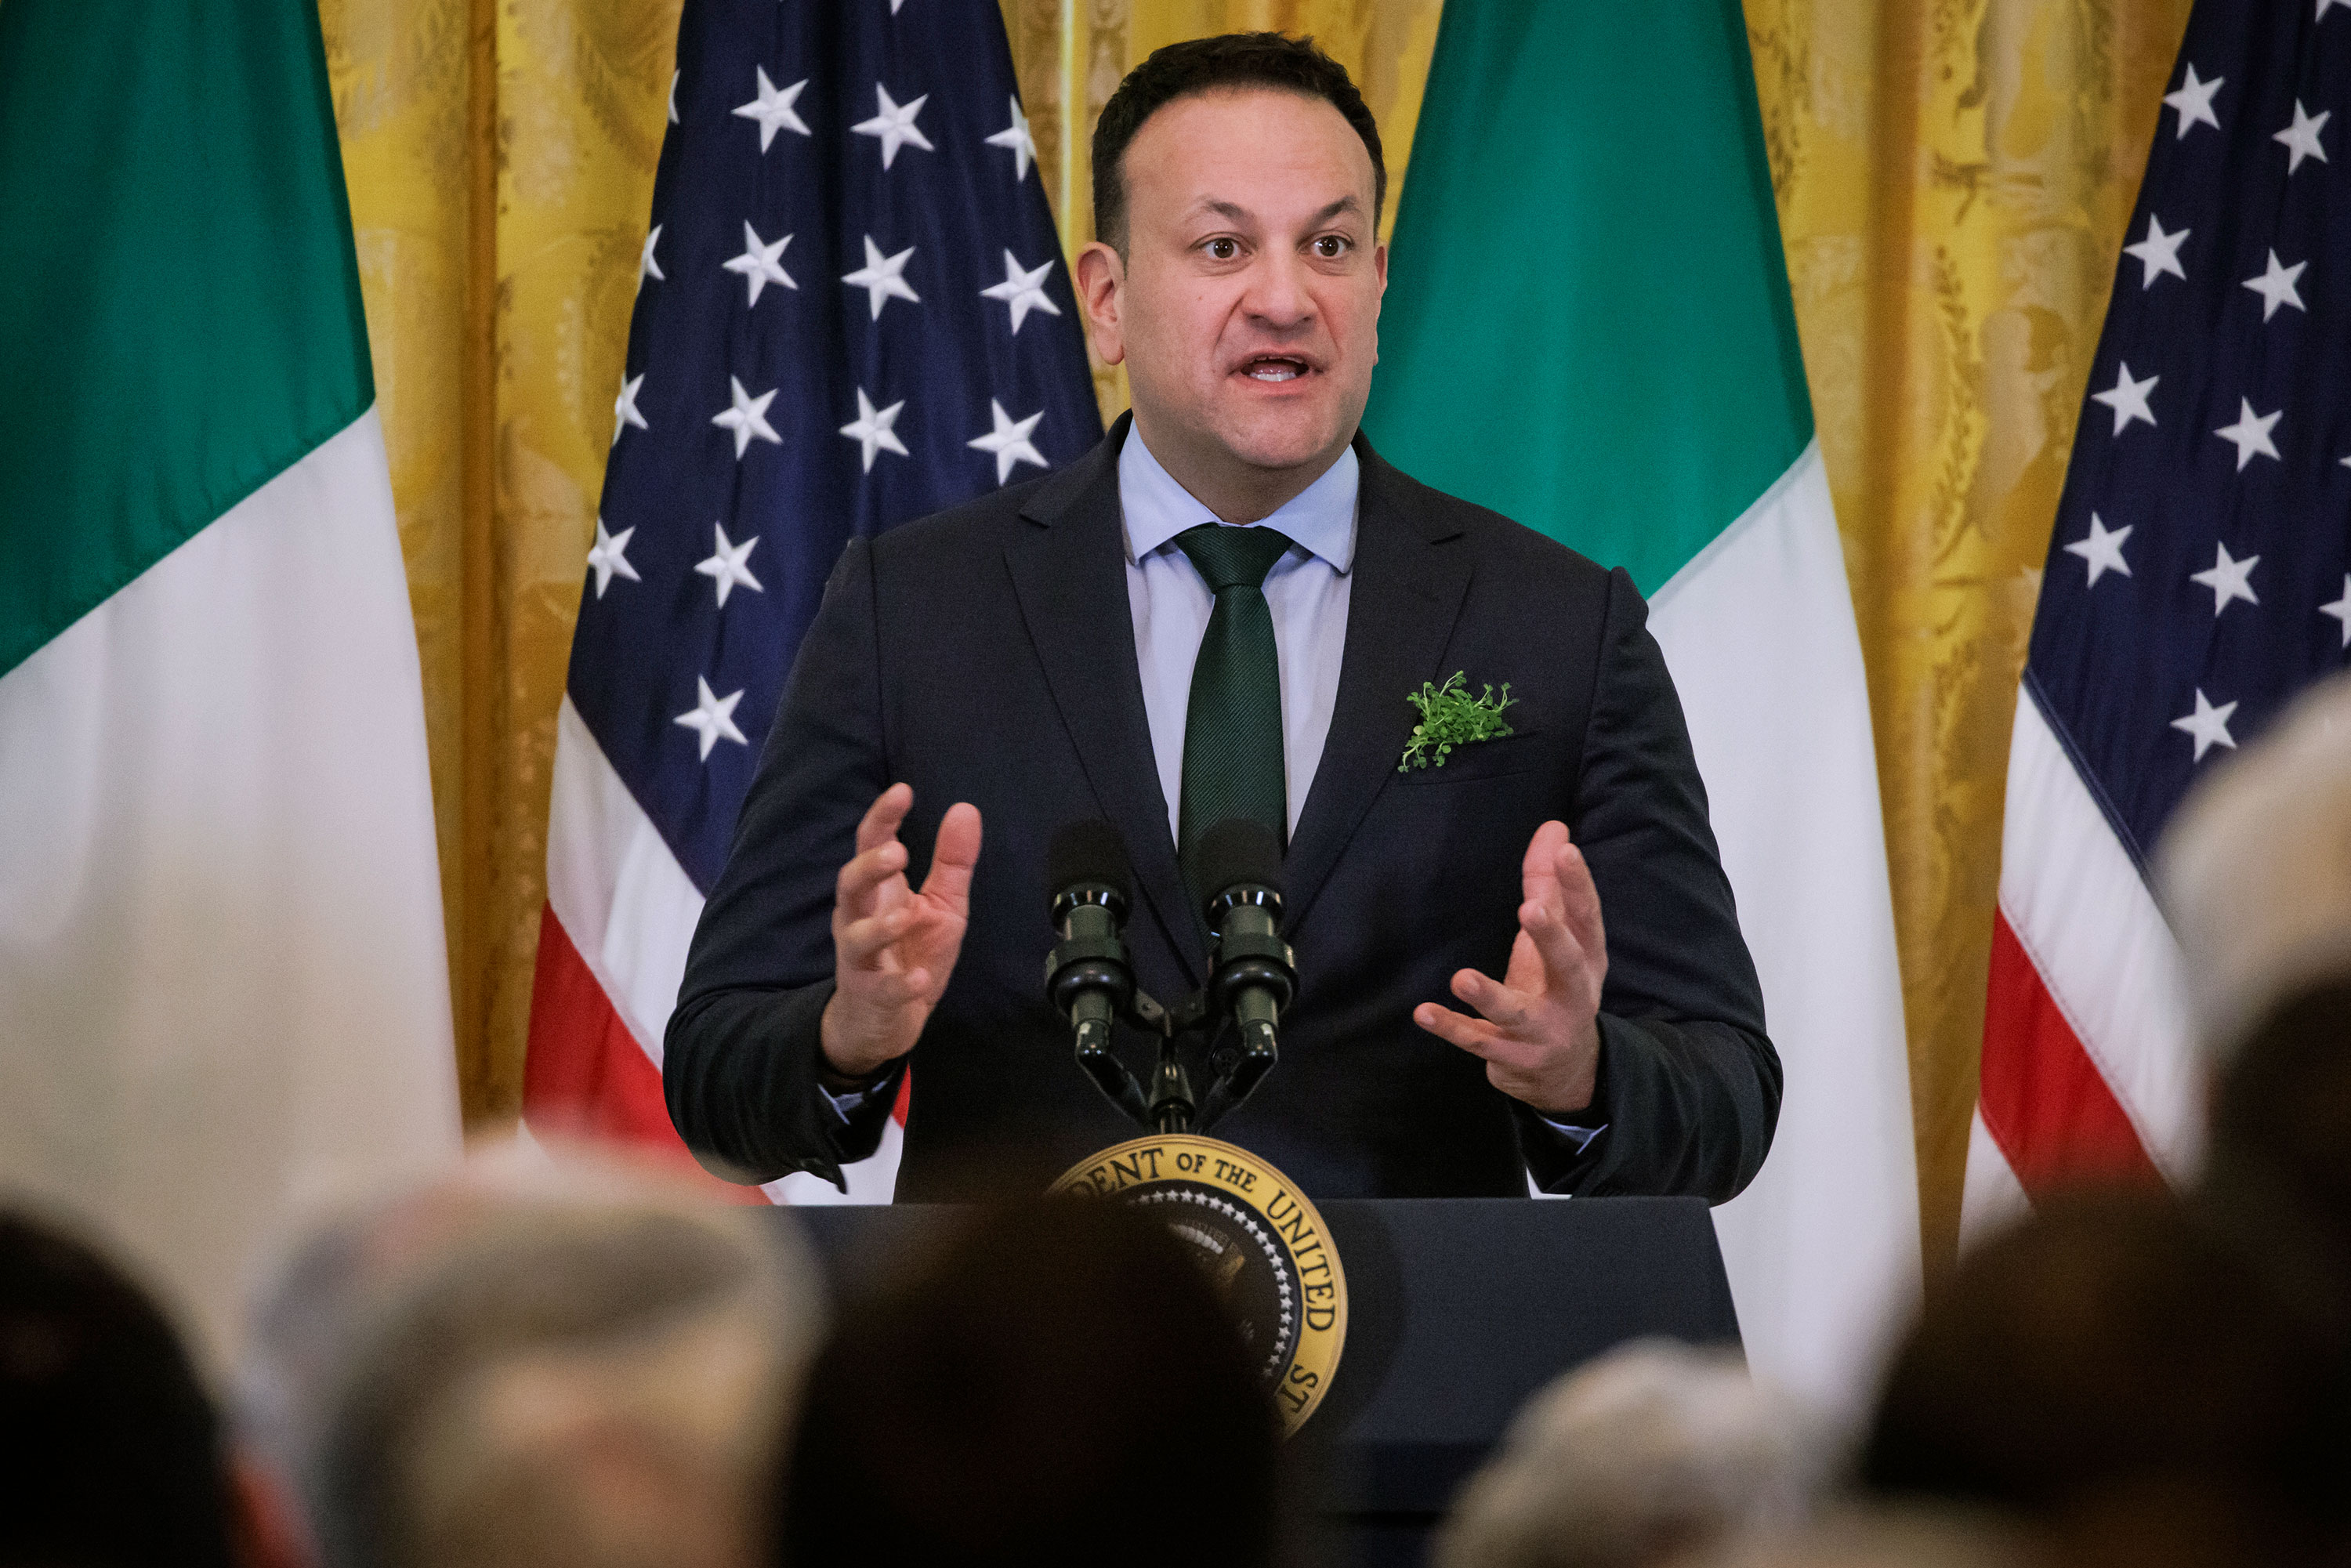 Irish Taoiseach Leo Varadkar speaks during a Saint Patrick's Day event with President Joe Biden at the White House in Washington, DC, on Sunday.